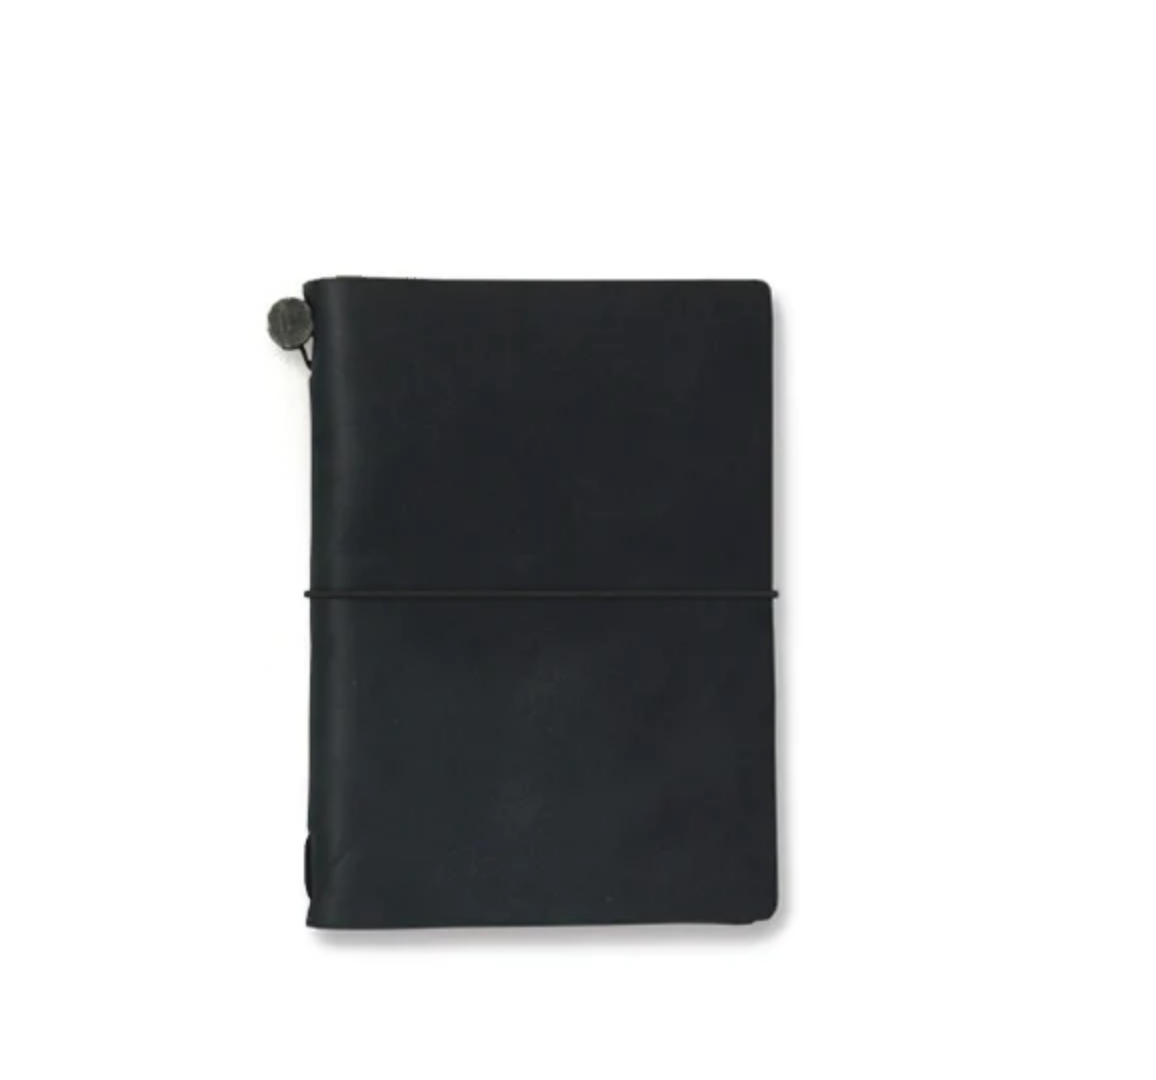 Traveler's Company Leather Notebook Black Passport Size